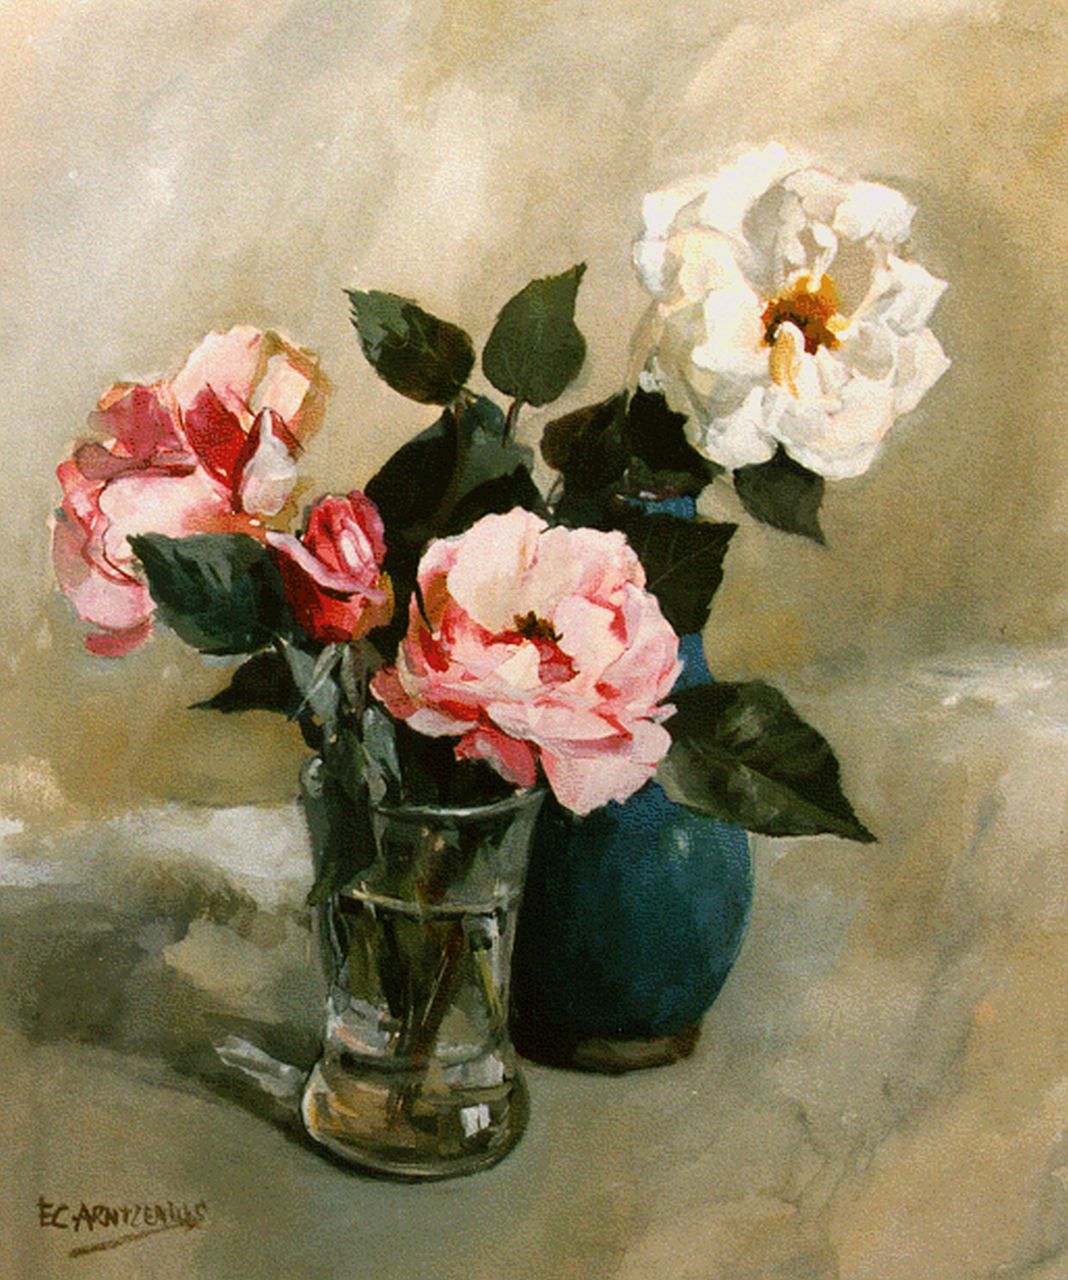 Arntzenius E.C.  | Elise Claudine Arntzenius, A still life with pink and white roses, watercolour on paper 40.0 x 34.2 cm, signed l.l.